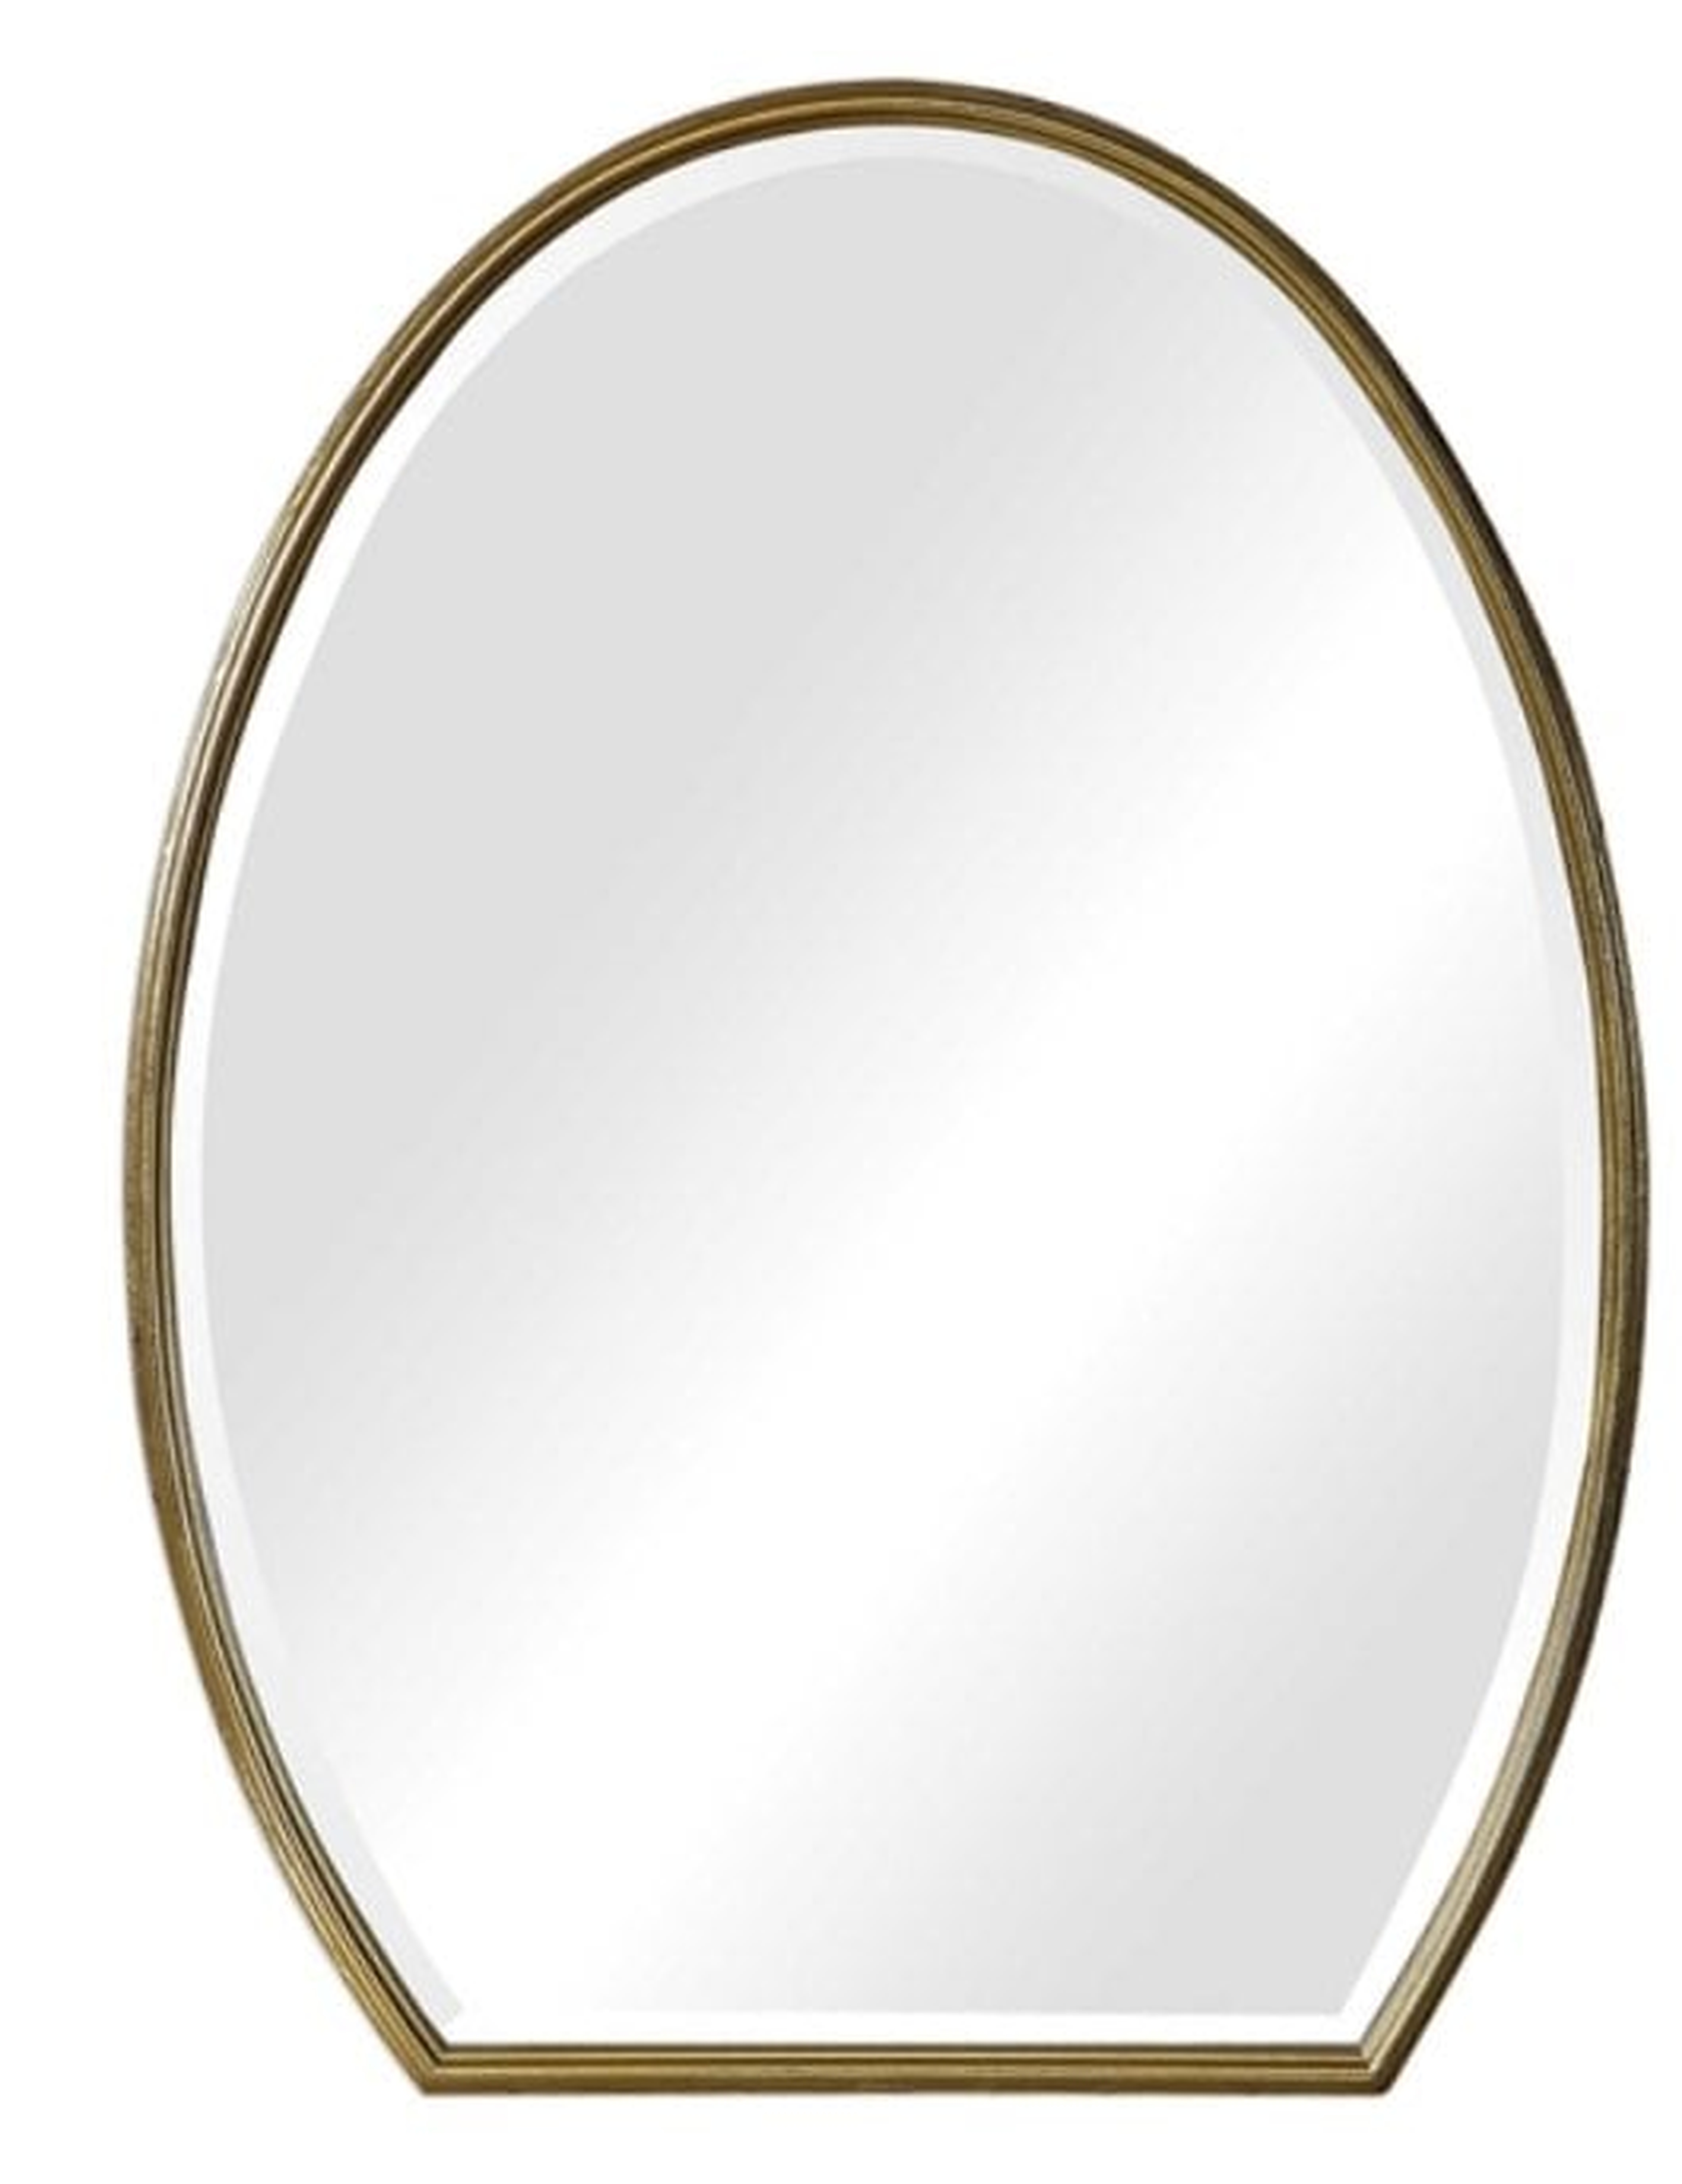 Kenzo Vanity Mirror - Hudsonhill Foundry